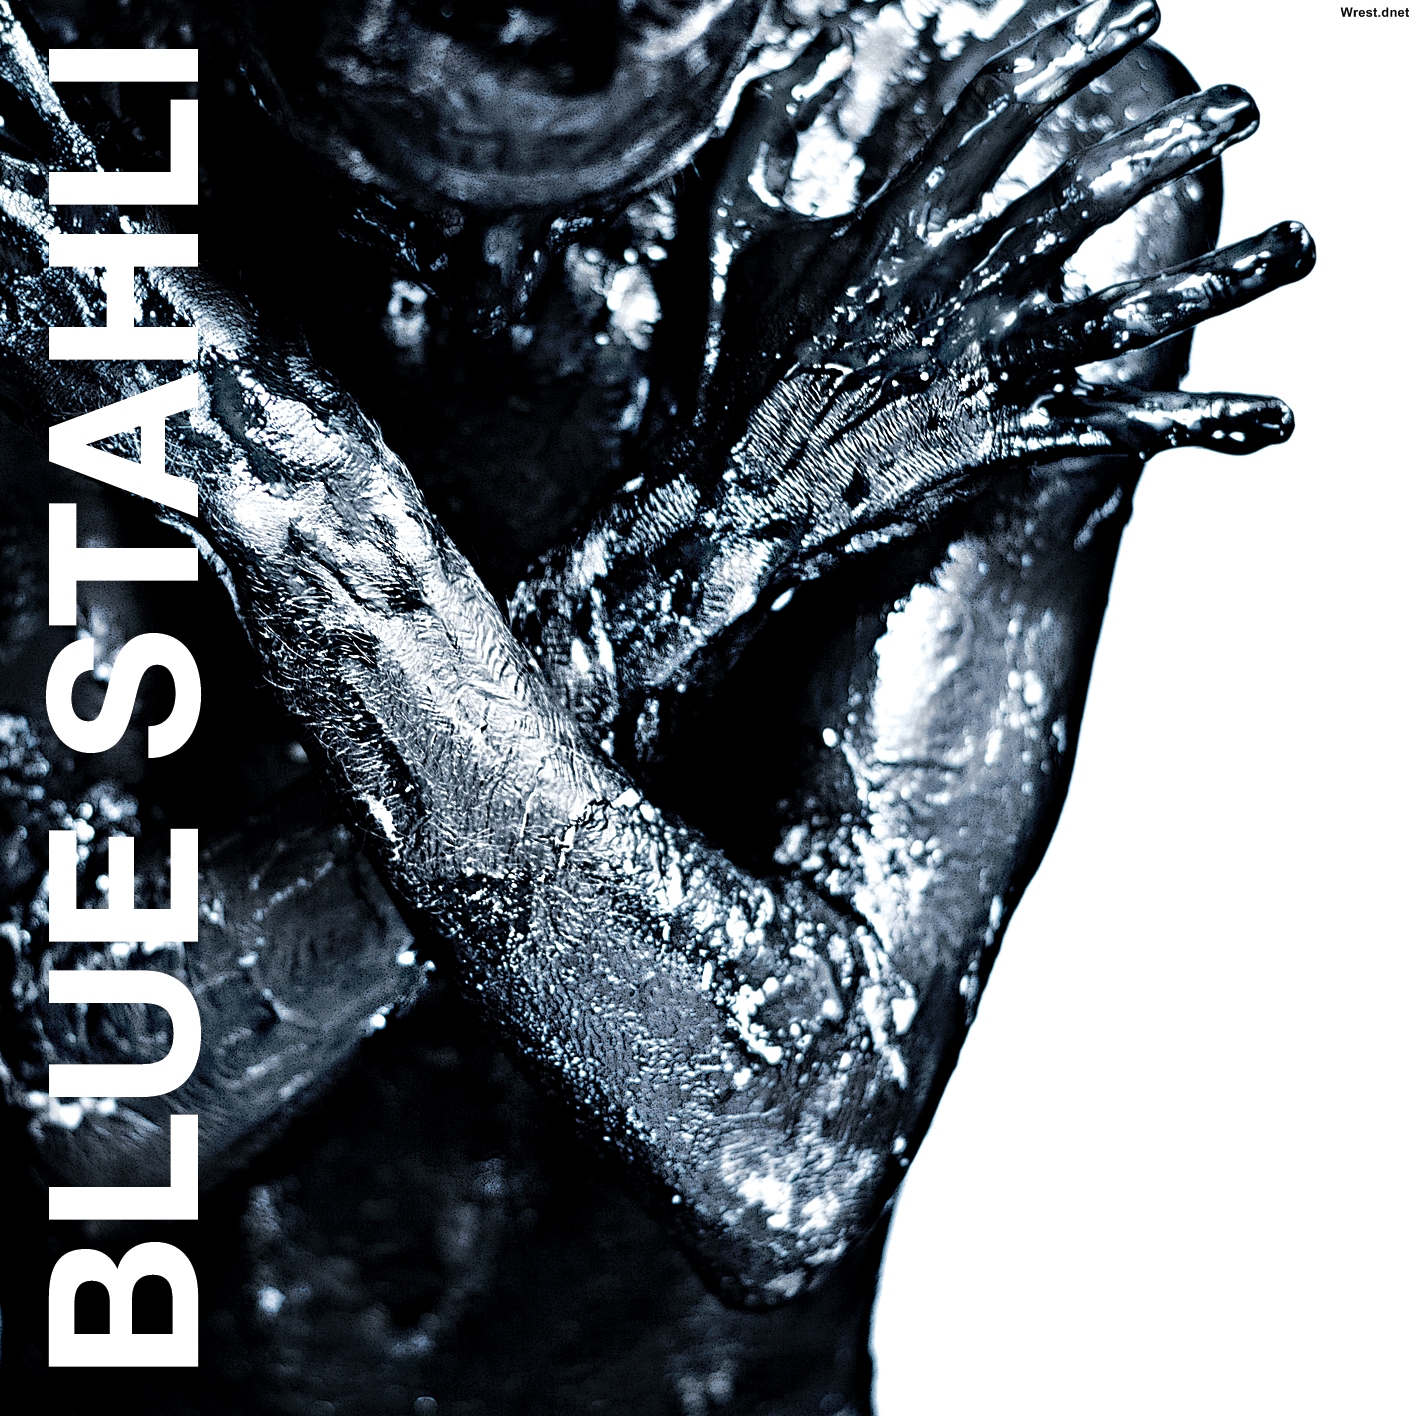 Blue Stahli - Ultra Numb (http//vk.com/sito_public)